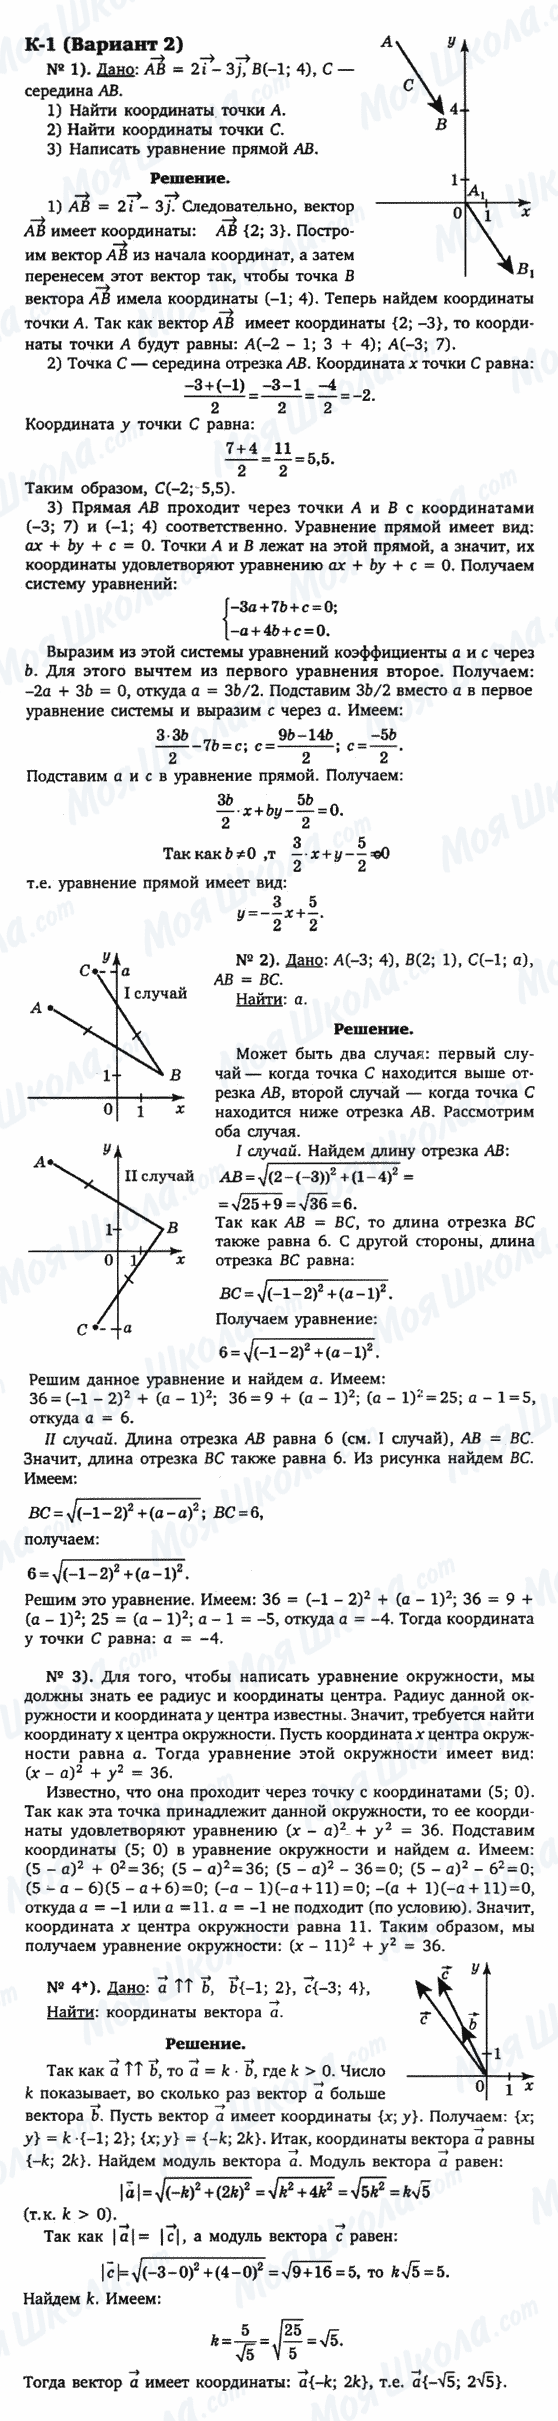 ГДЗ Геометрия 9 класс страница к-1(вариант 2)